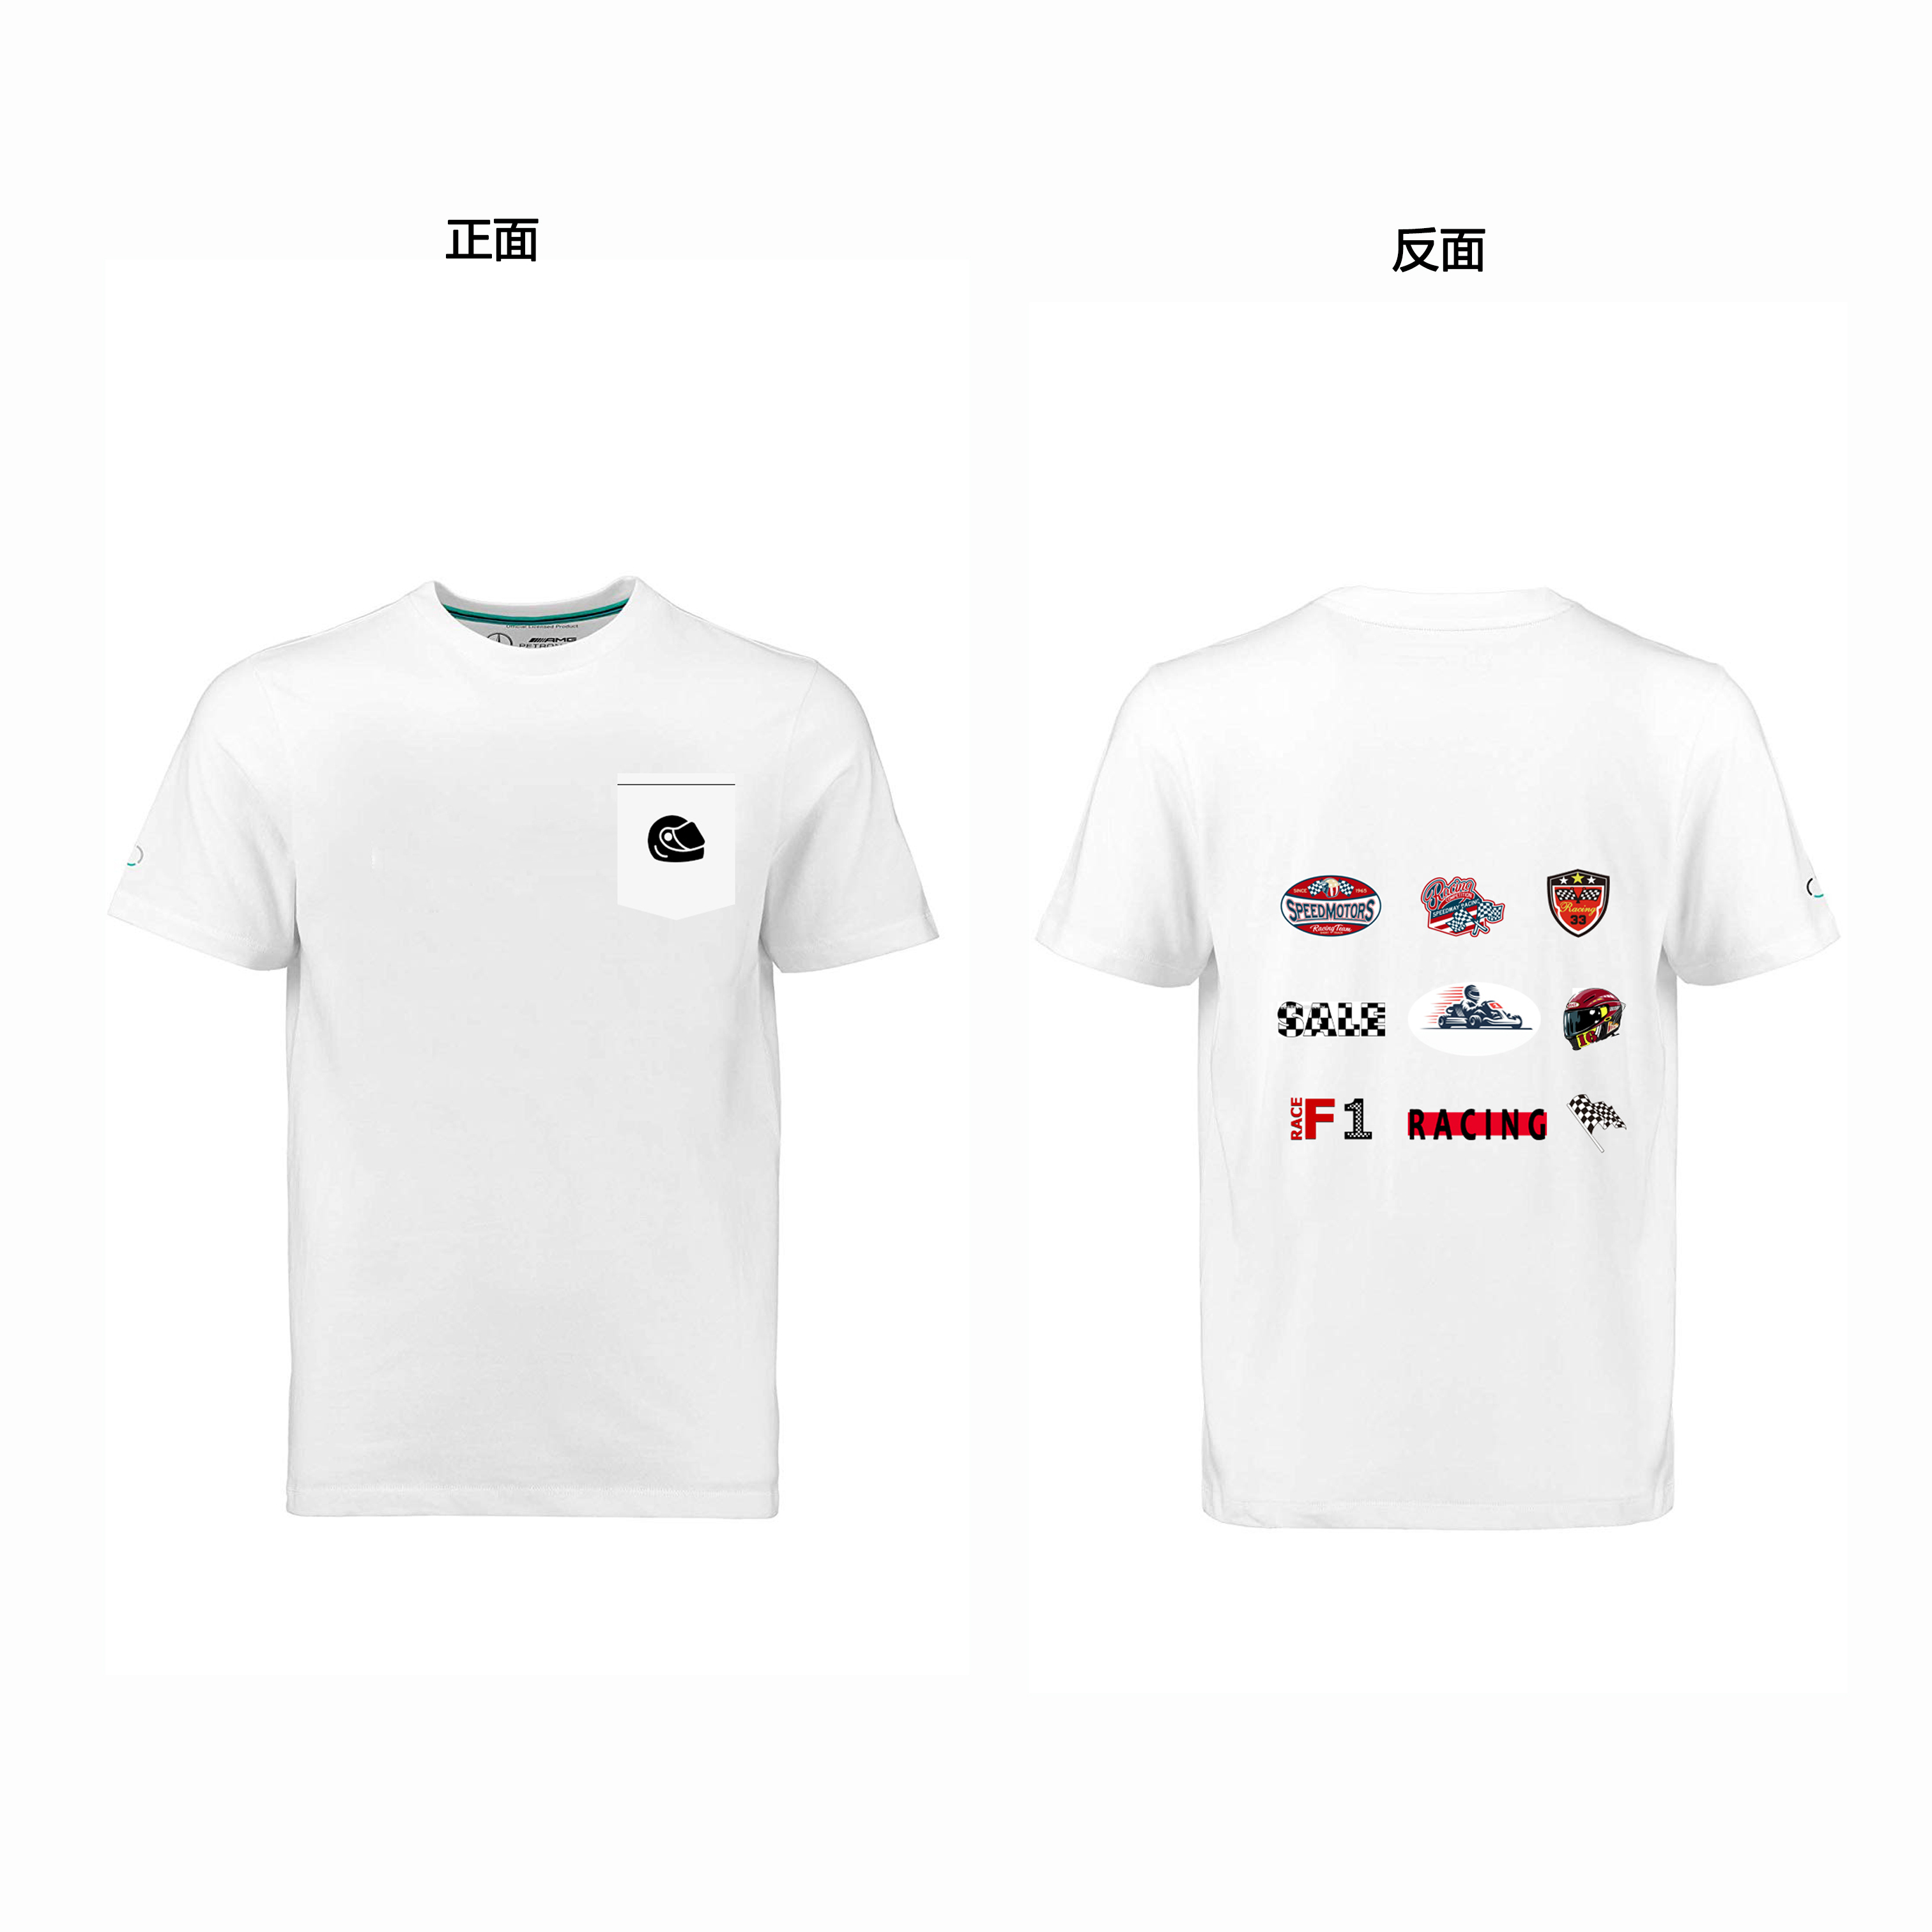 Custom Made Team Tee Shirts With Logo Printing